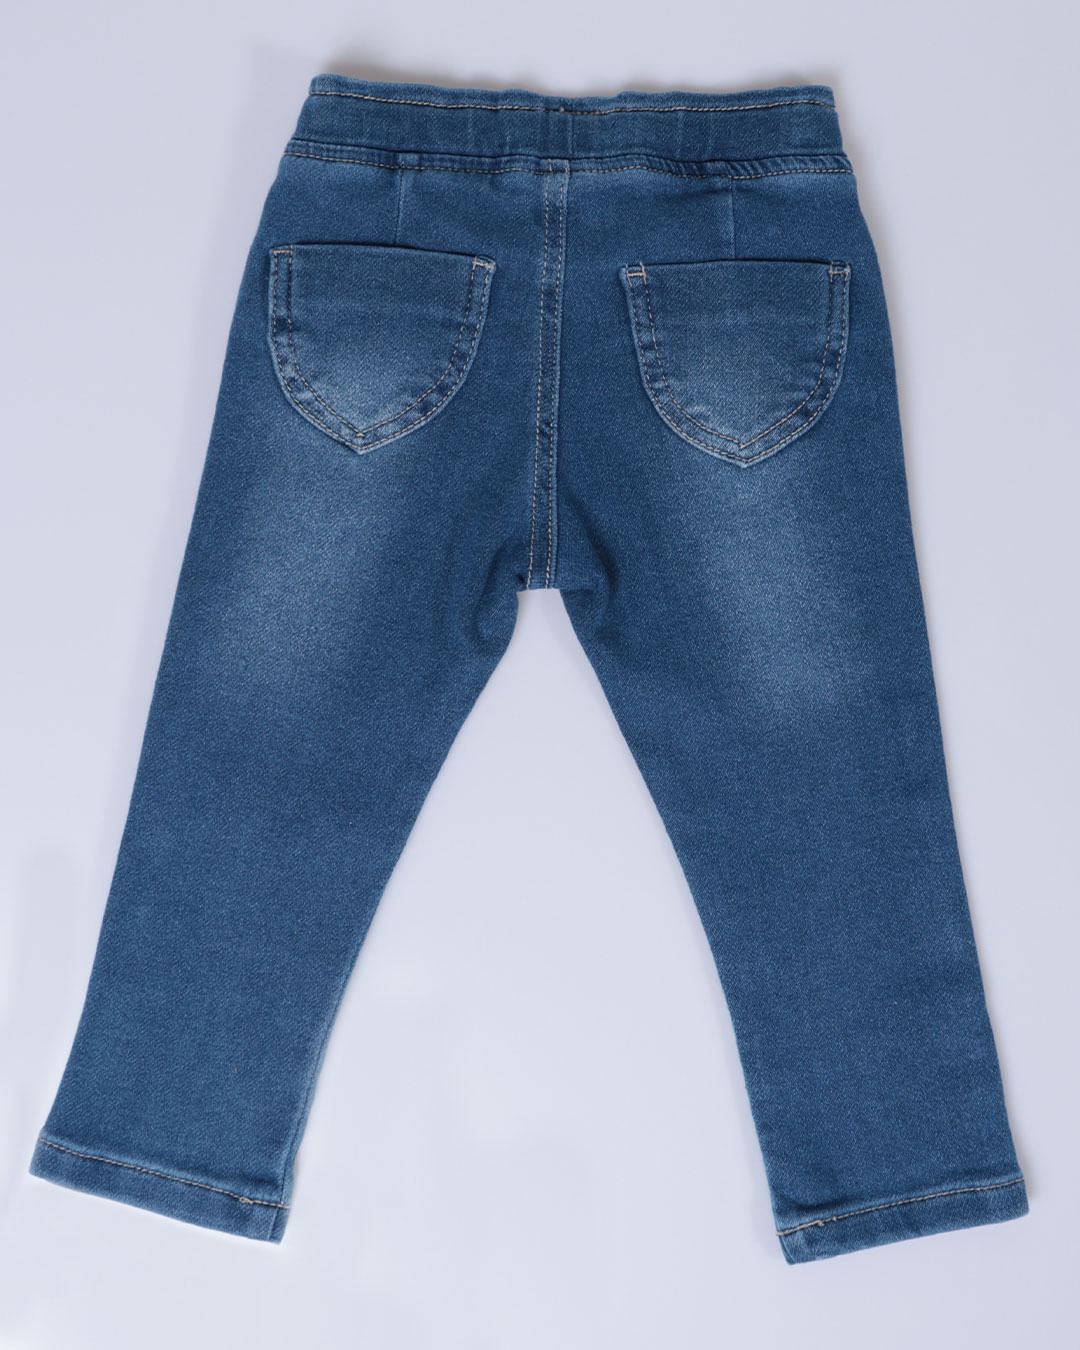 Calca-3181-Jeans--Fem-13---Blue-Jeans-Claro